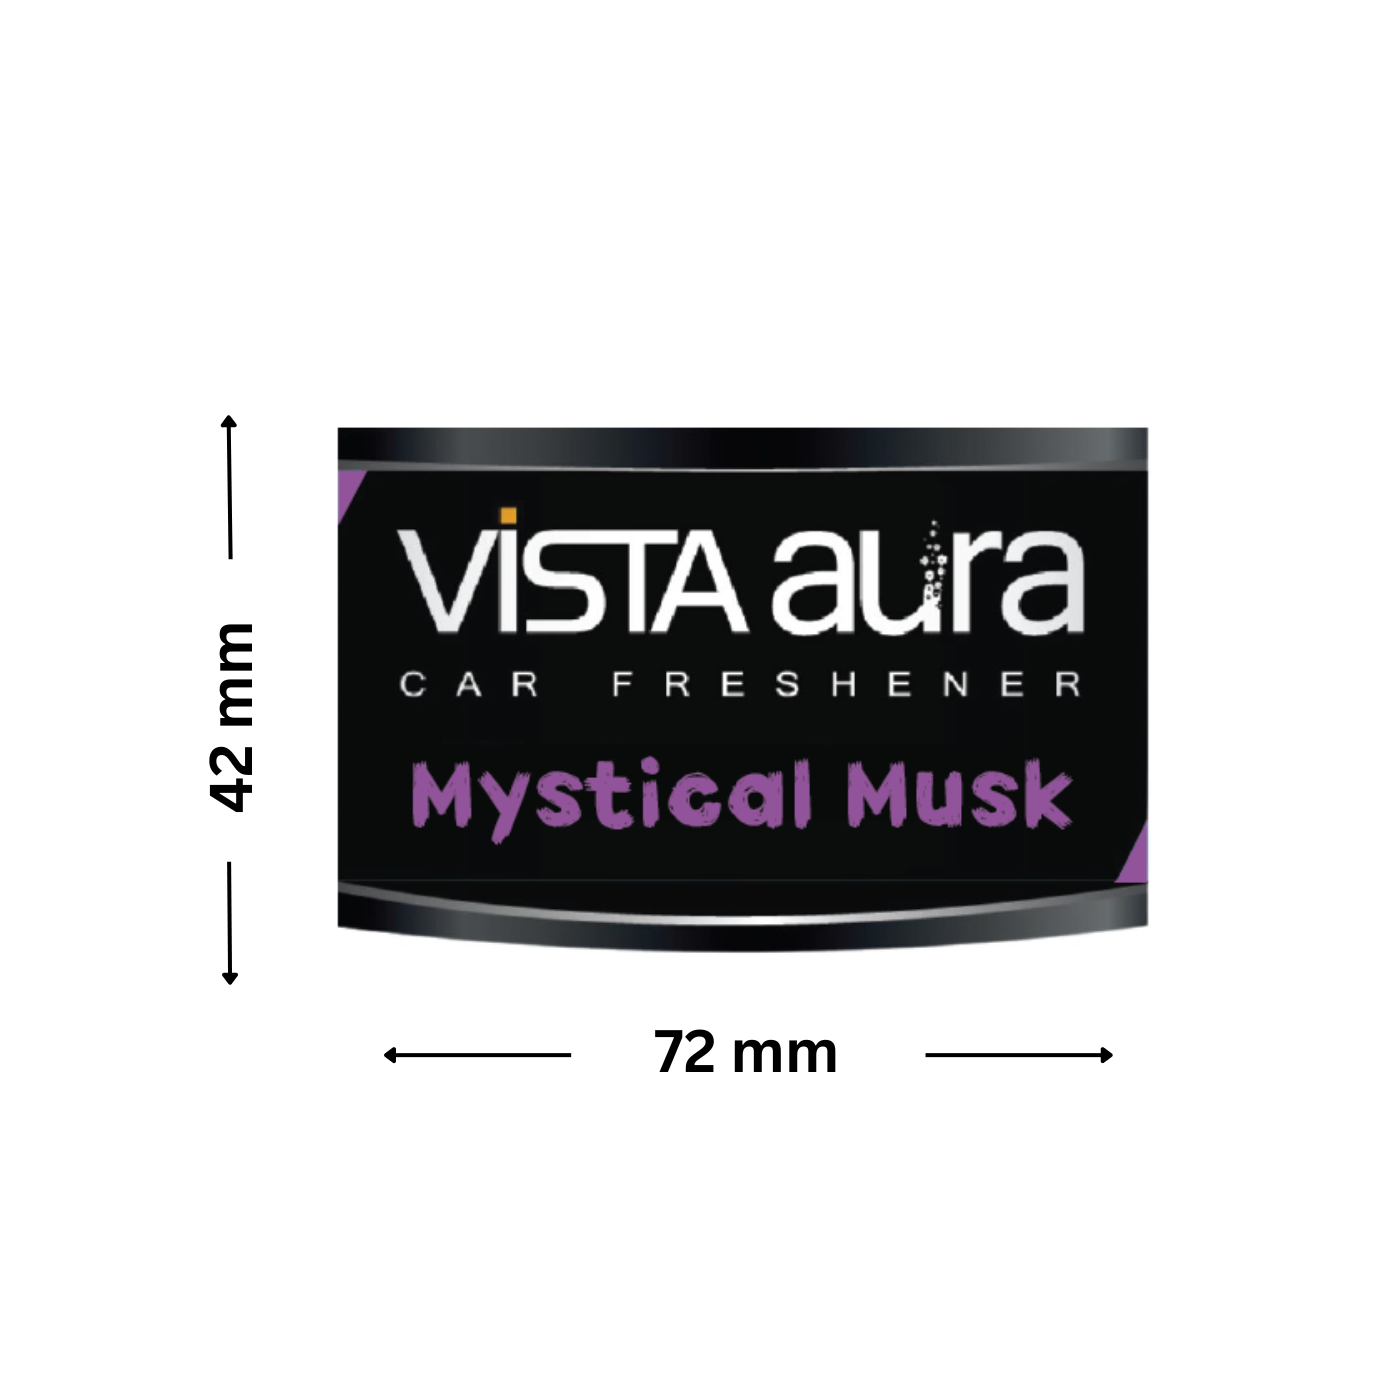 Aura Natural Fiber Car Freshener - Mystical Musk 40 g